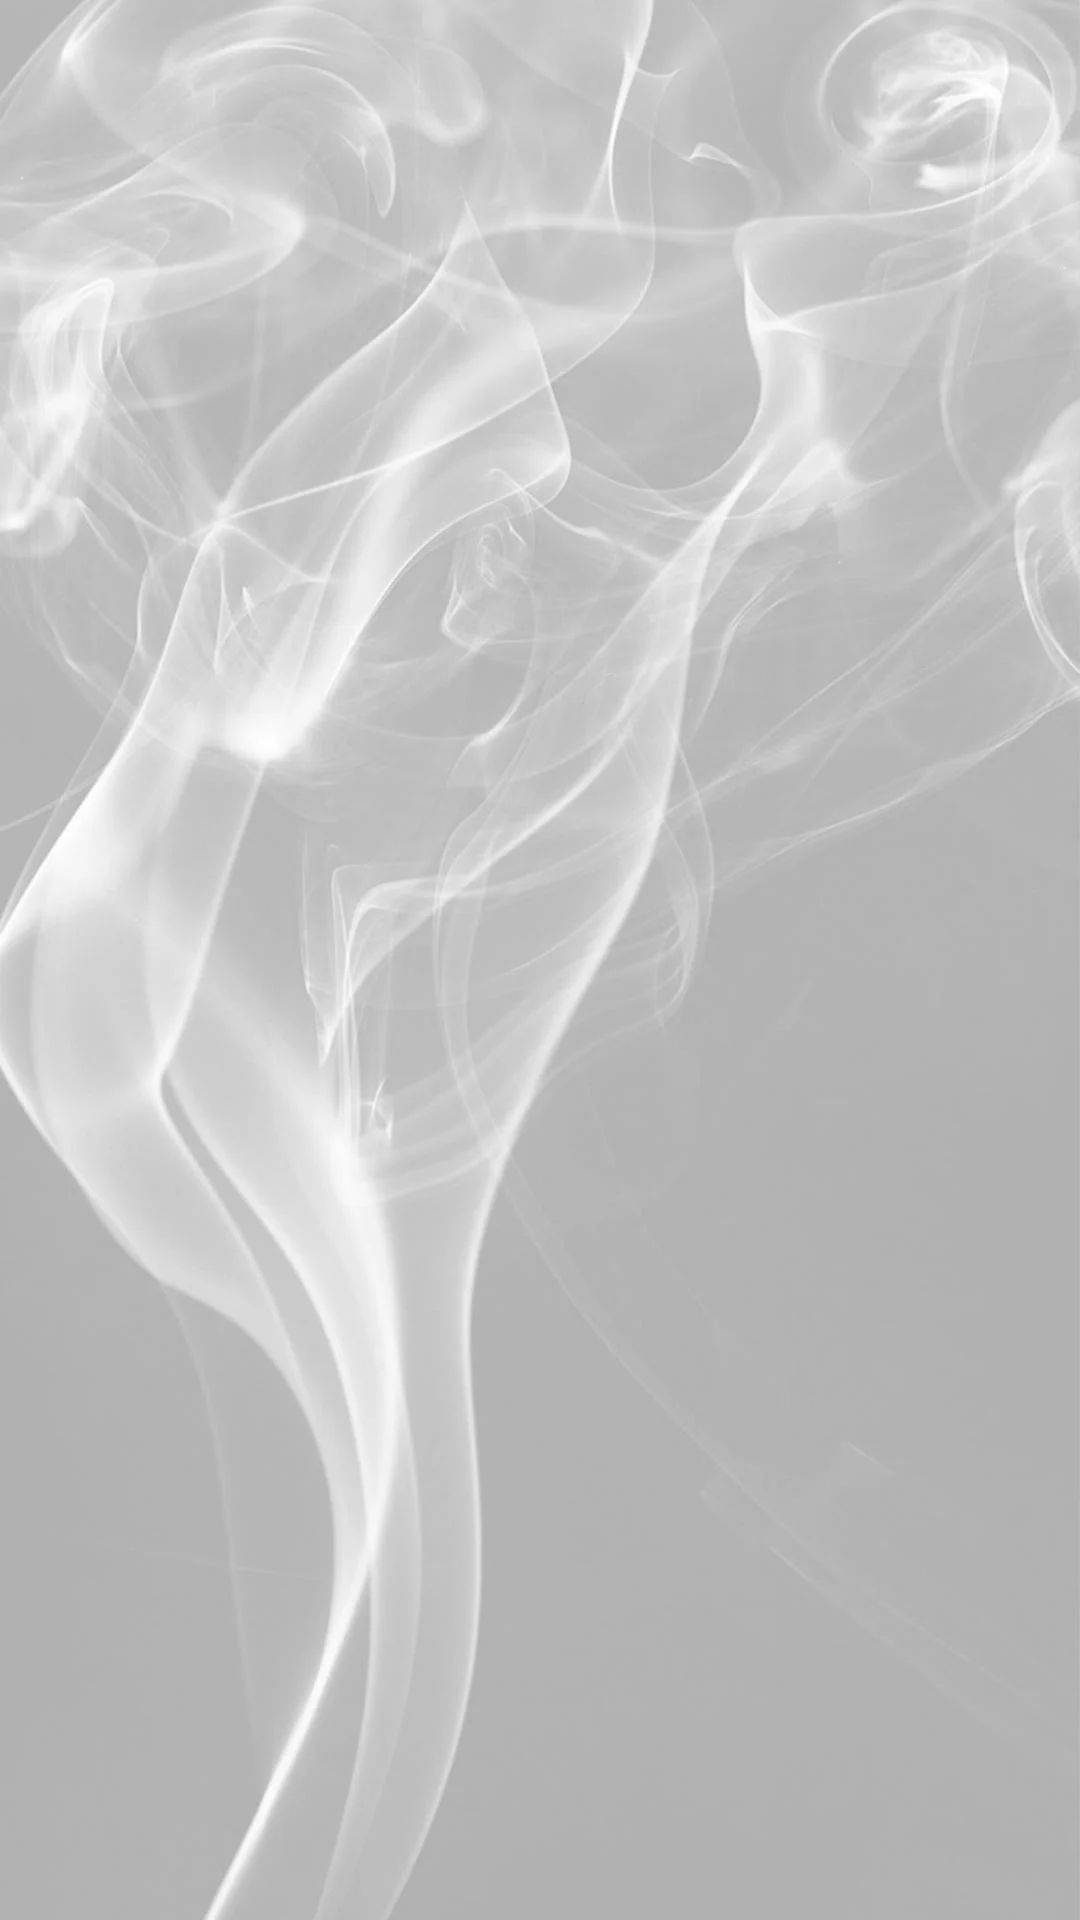 Aesthetic White Smoke